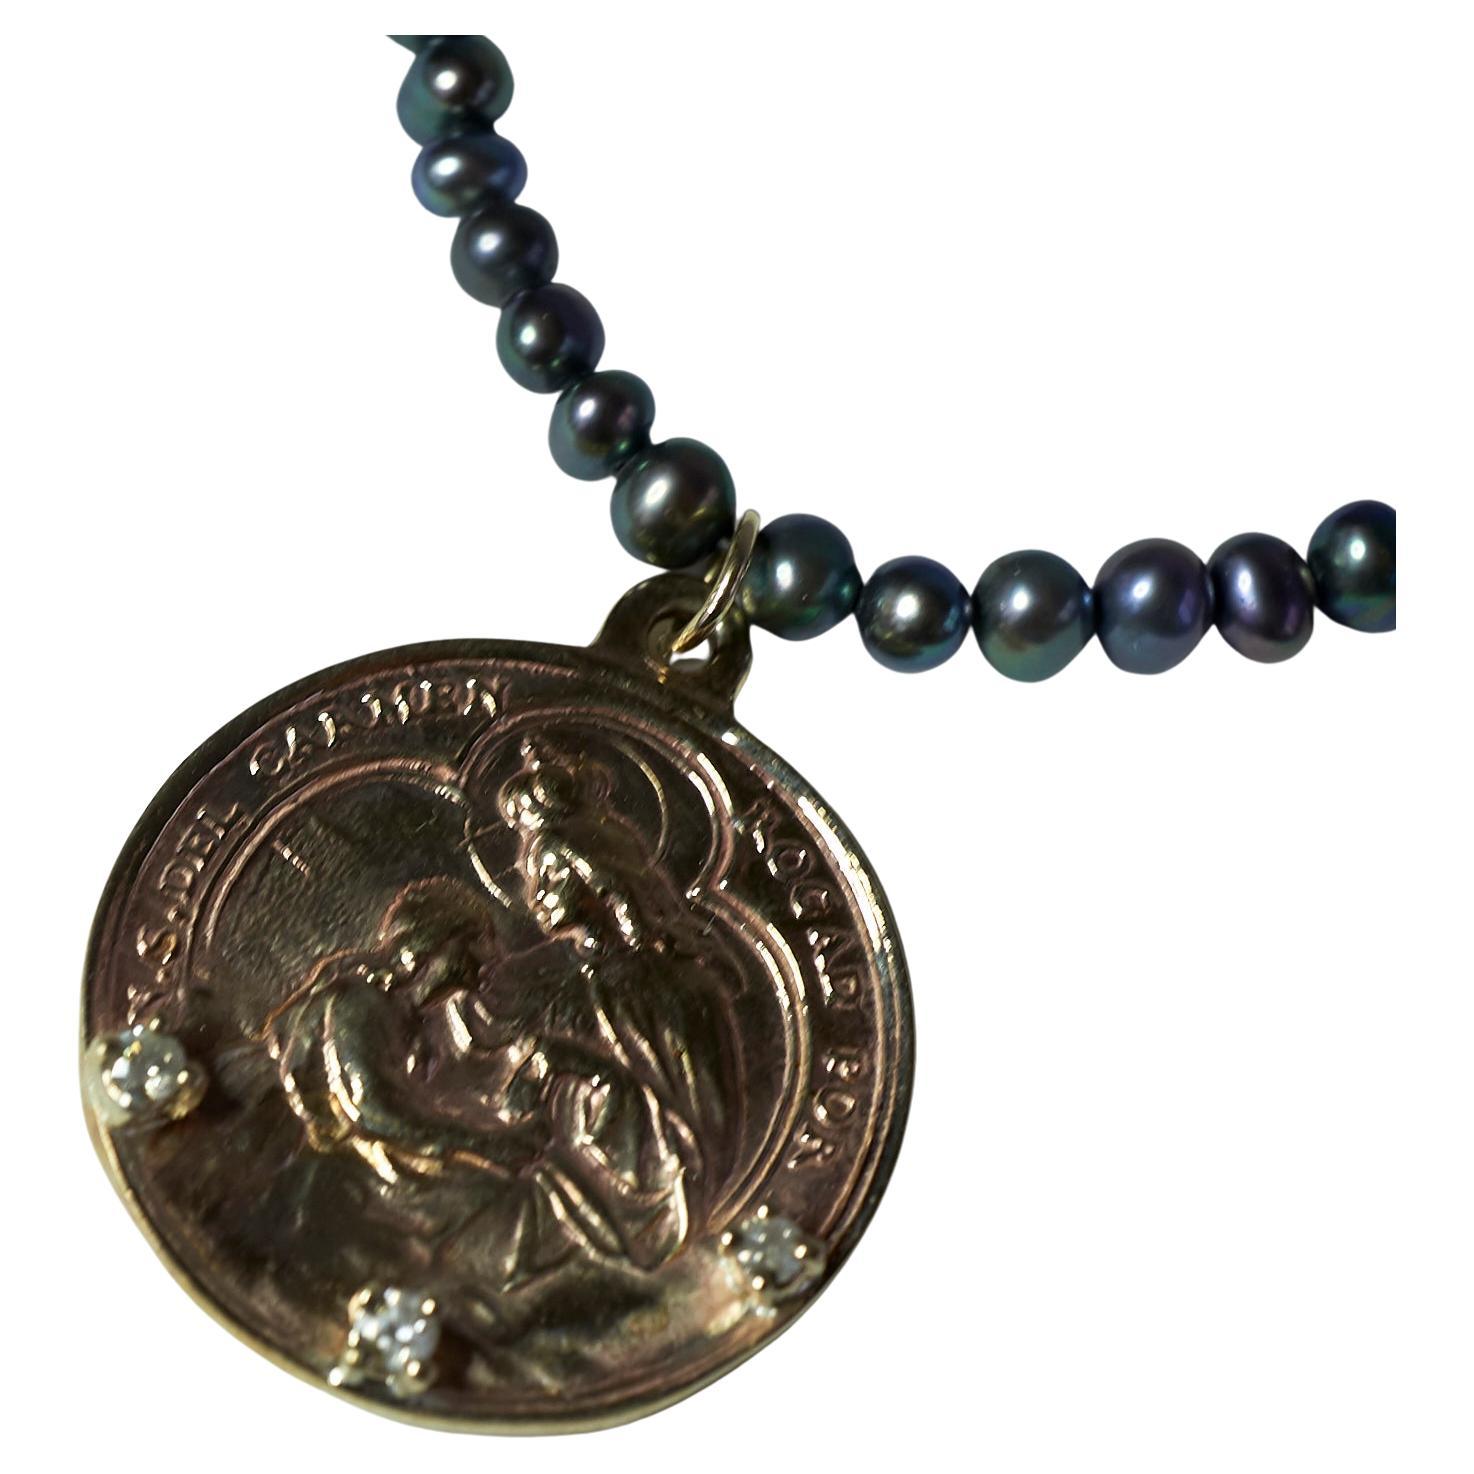 Diamond Virgin Mary Medal Necklace Choker Black Pearl Bead Chain J Dauphin For Sale